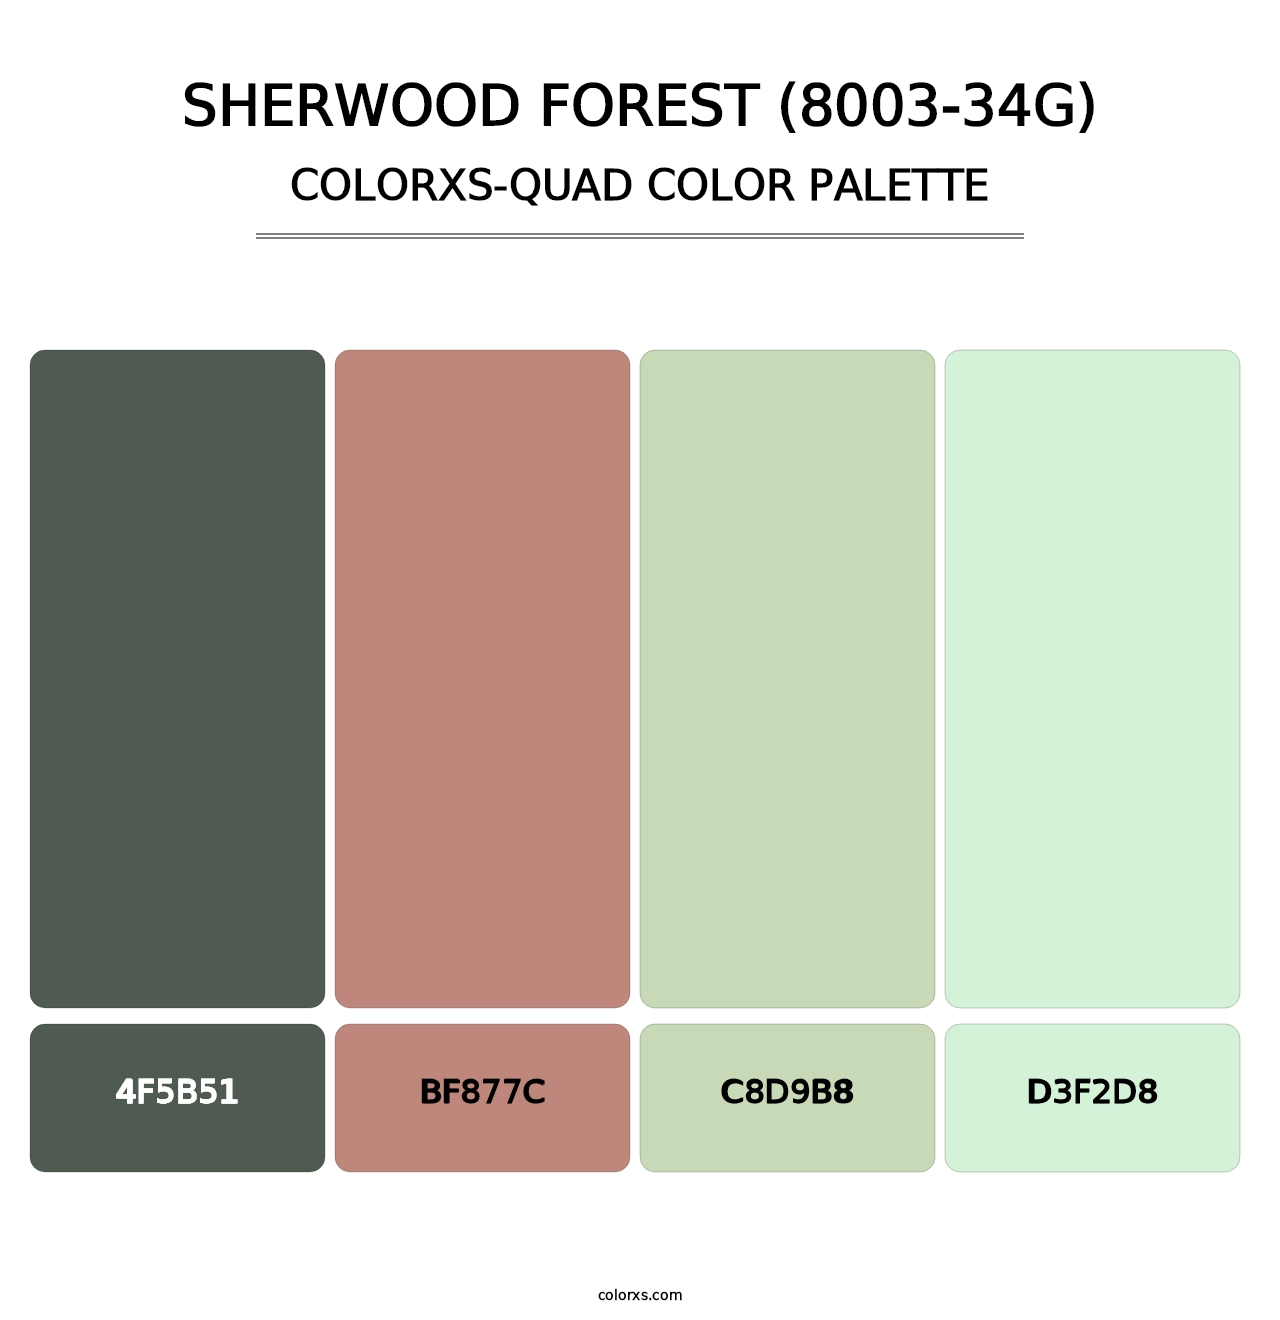 Sherwood Forest (8003-34G) - Colorxs Quad Palette